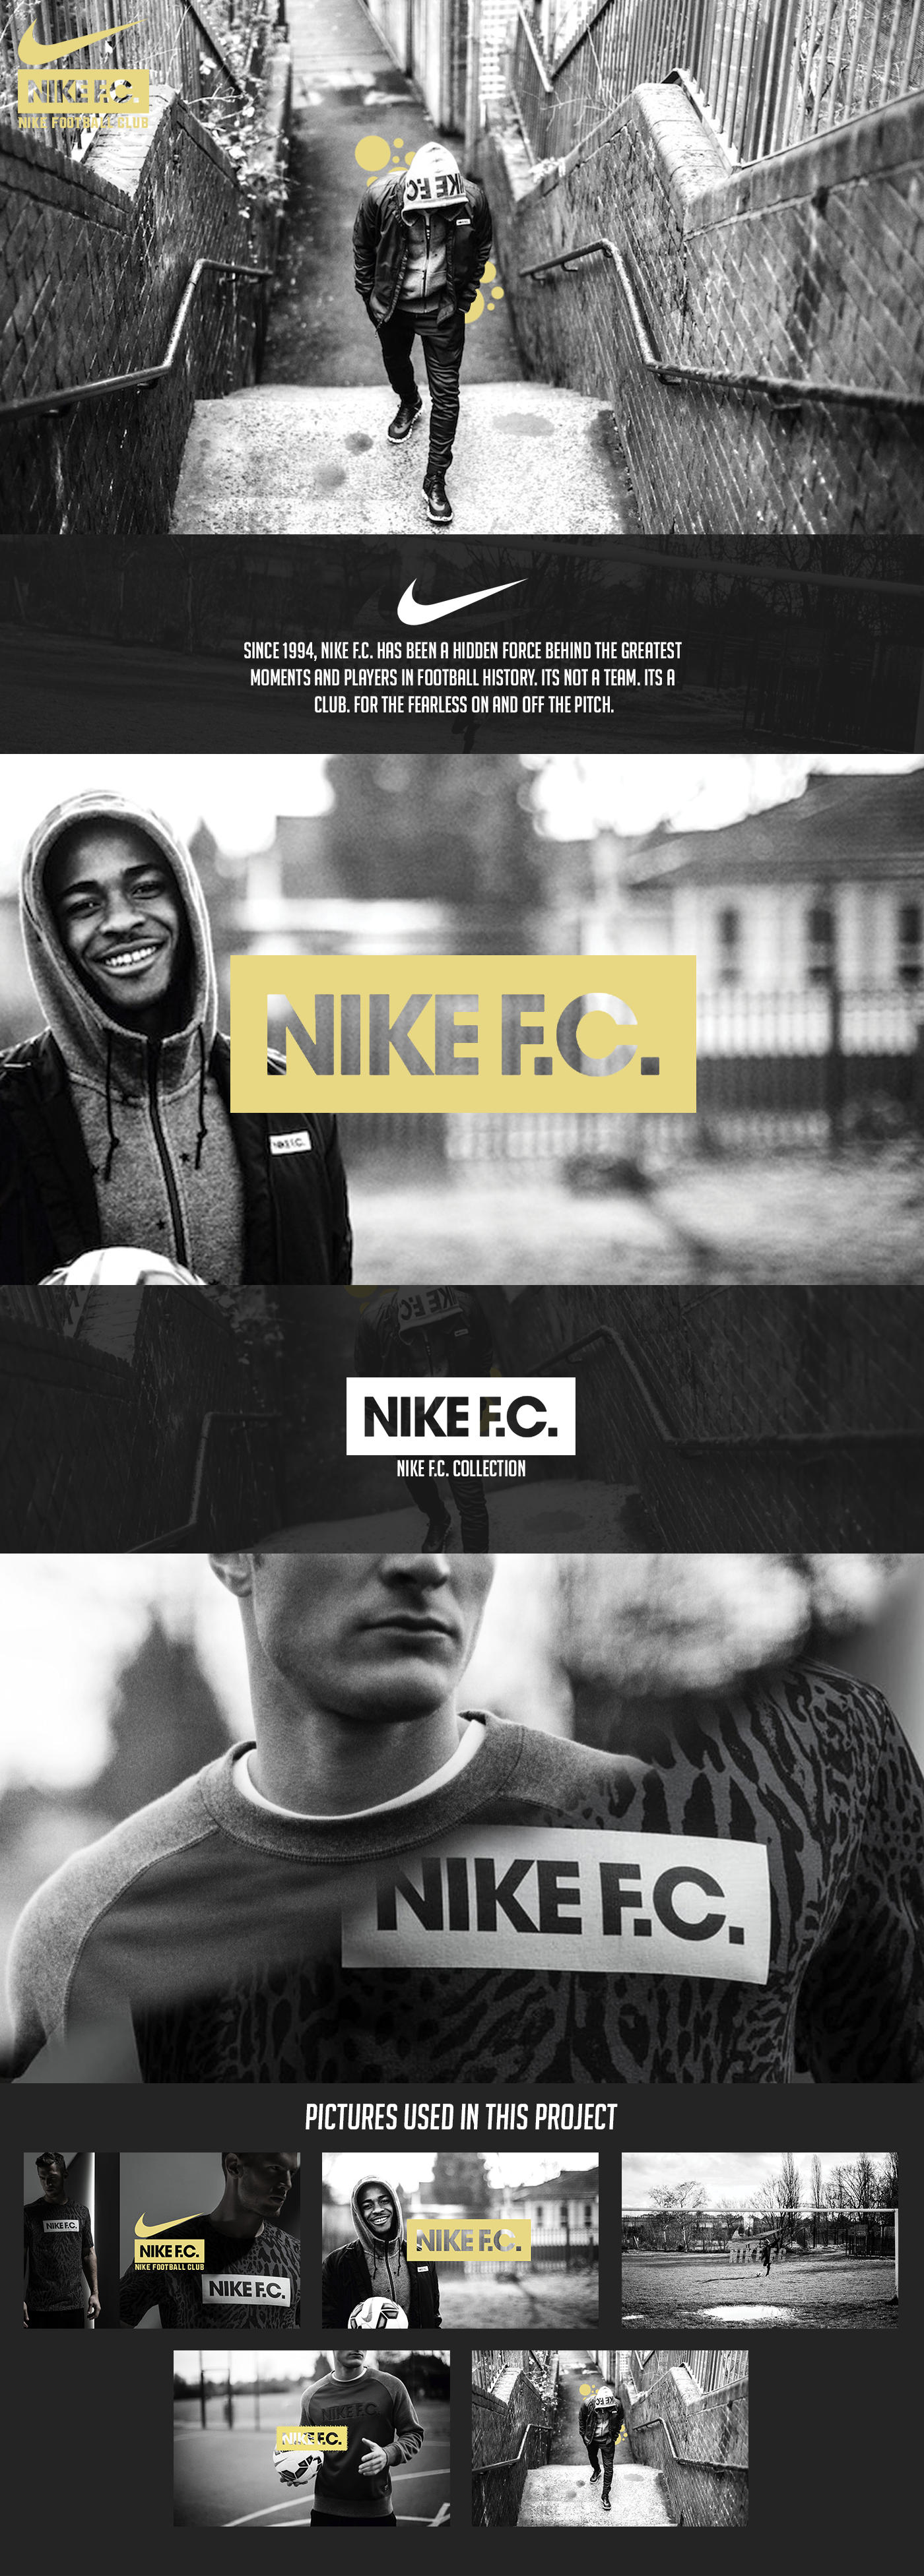 Nike nike fc NIKE FOOTBALL CLUB football football club Futbol nike soccer nike project Nike clothing